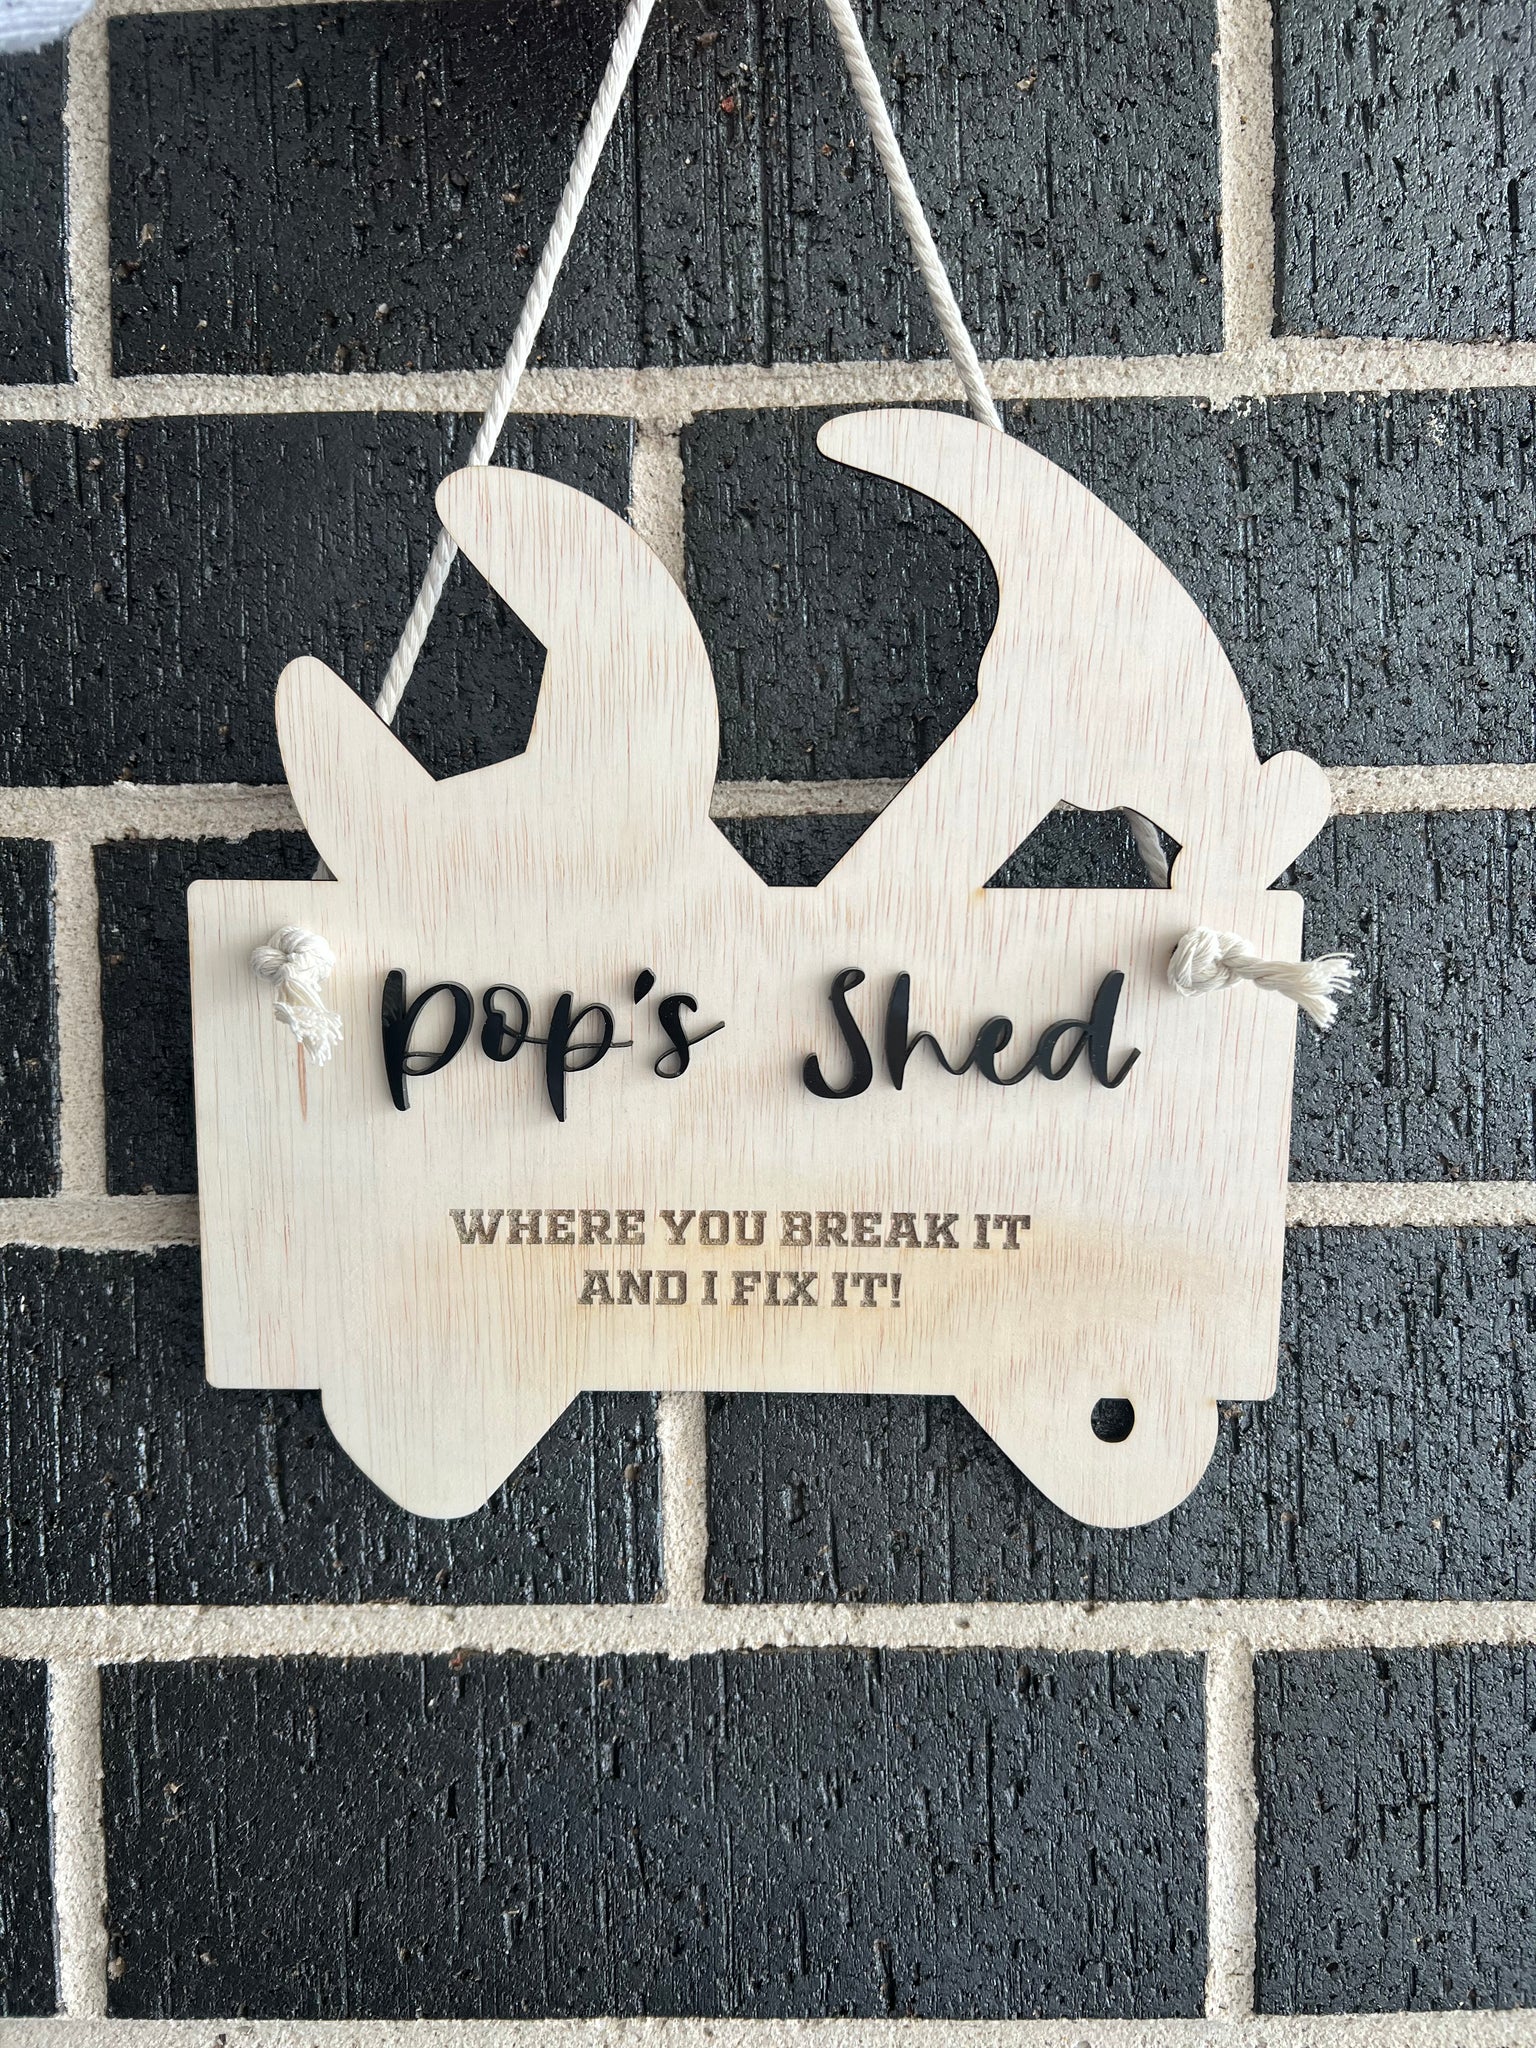 Pops shed plaque